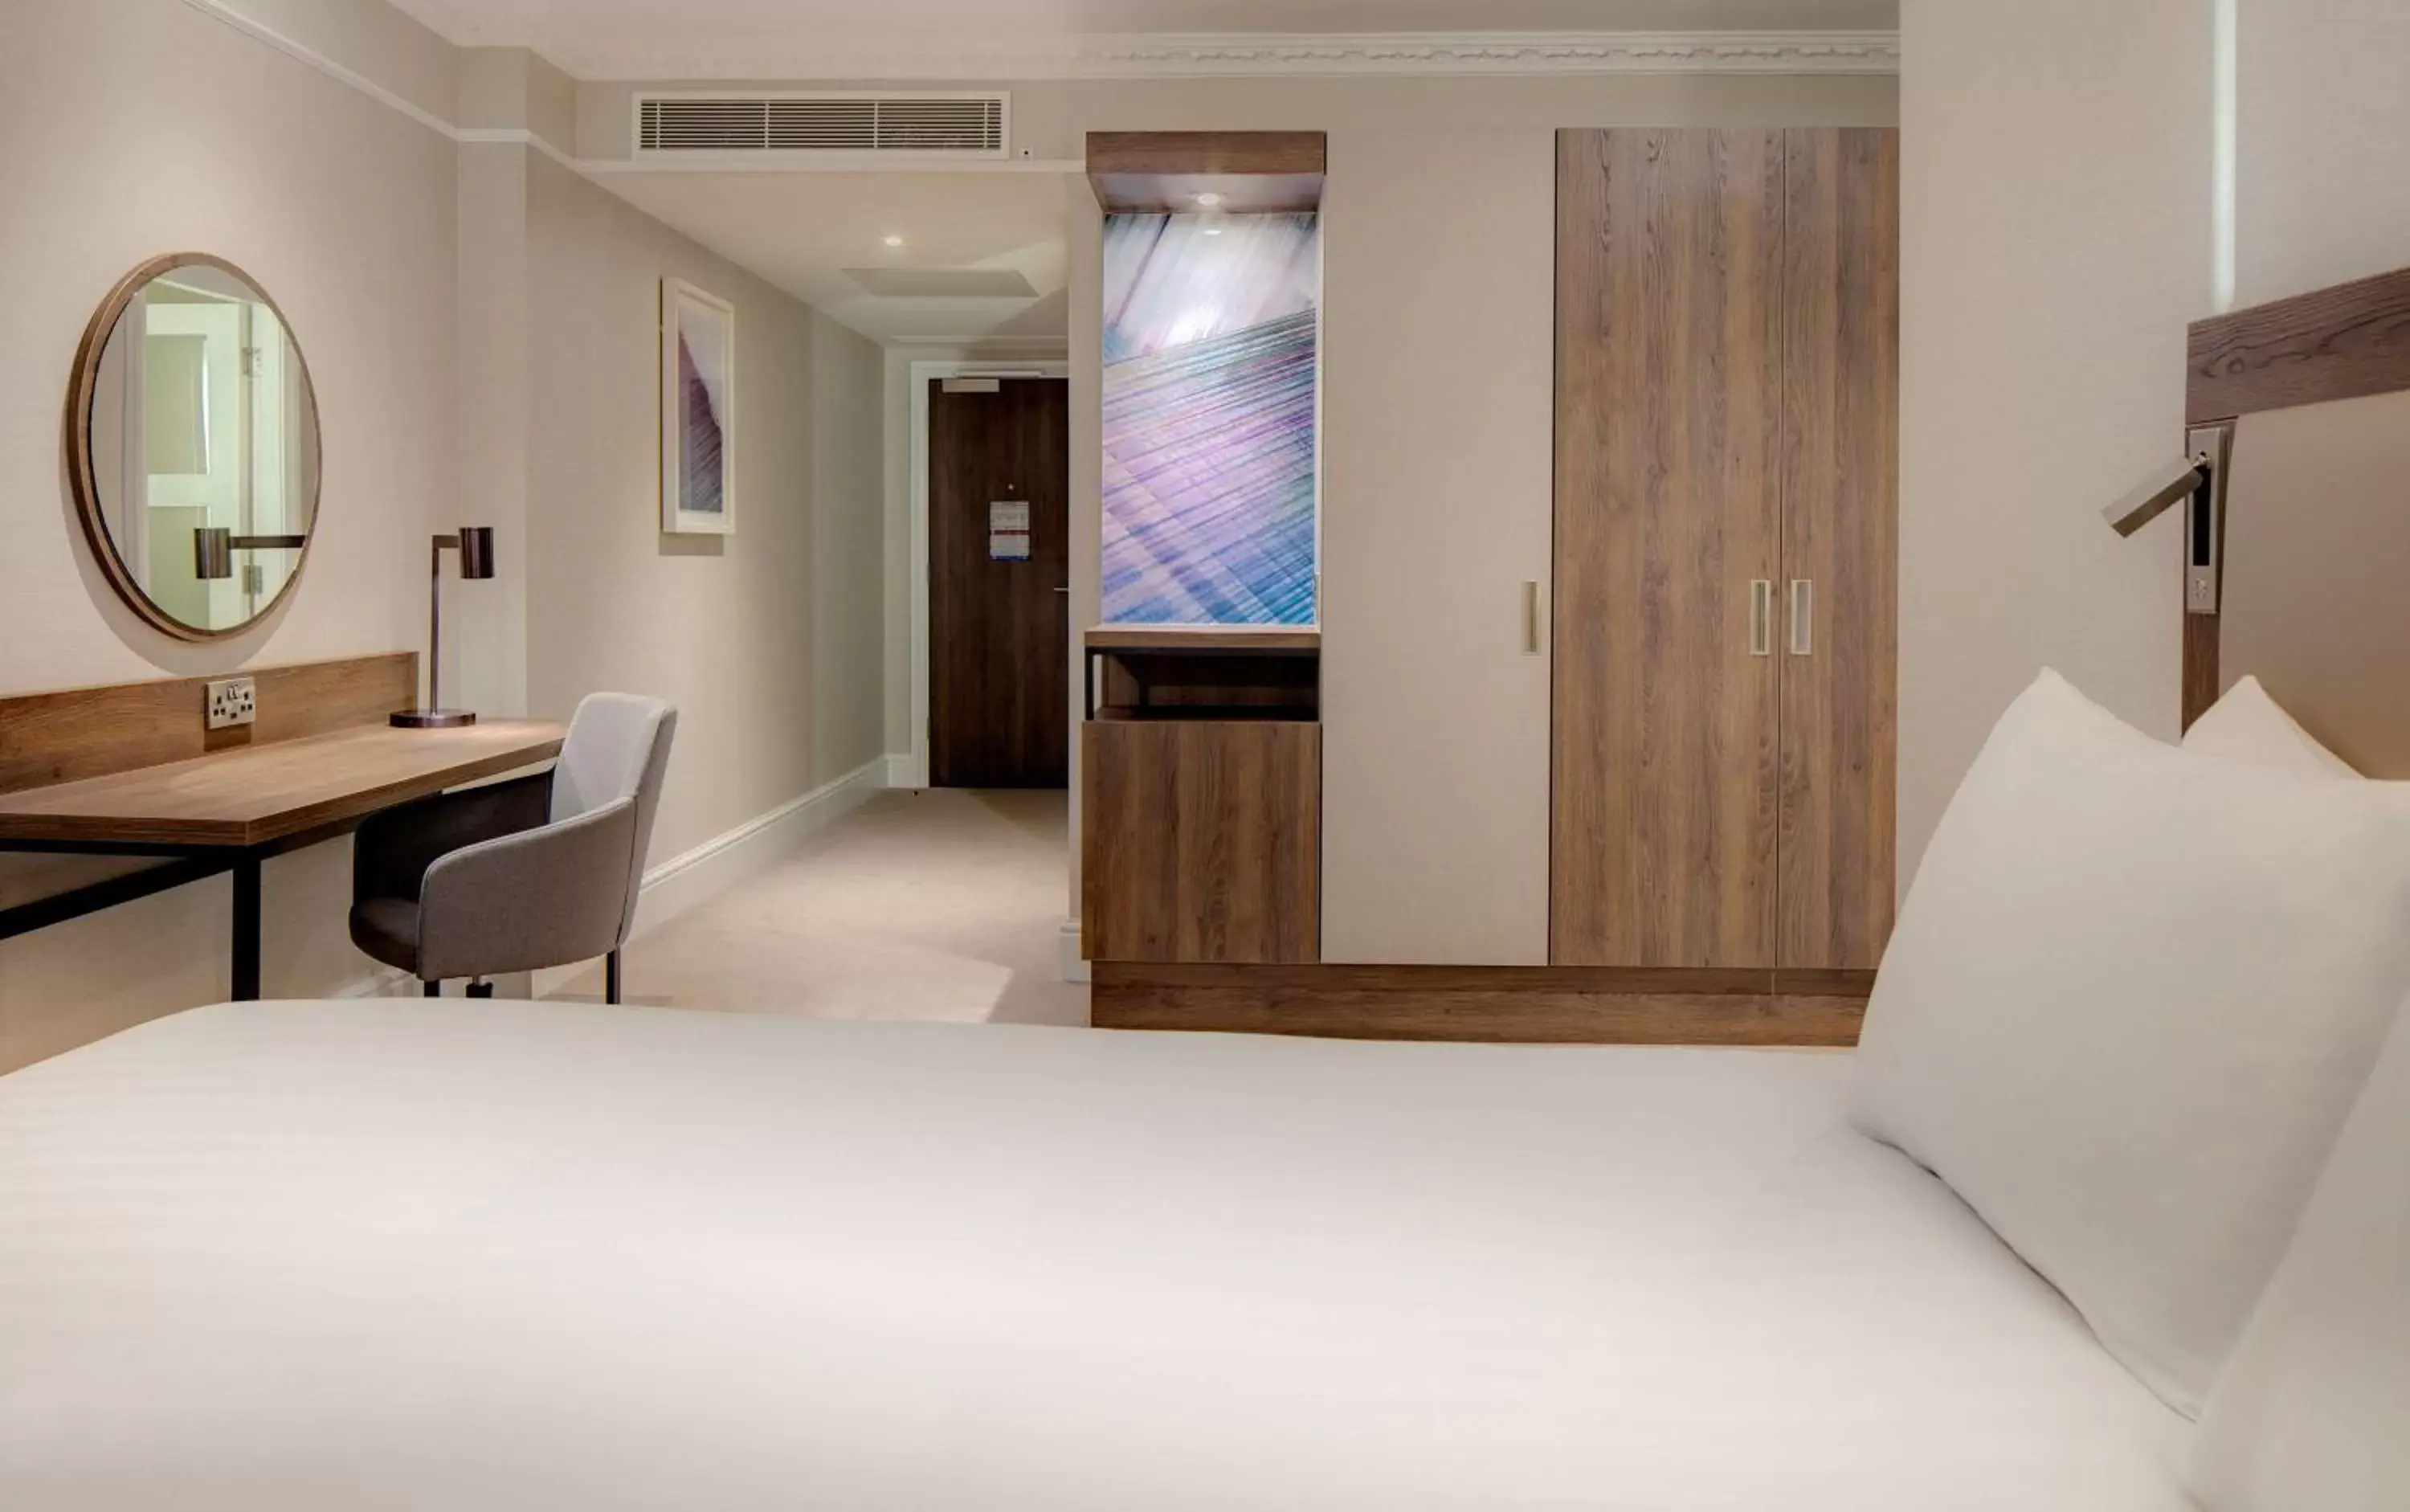 Bed in Hilton Edinburgh Carlton